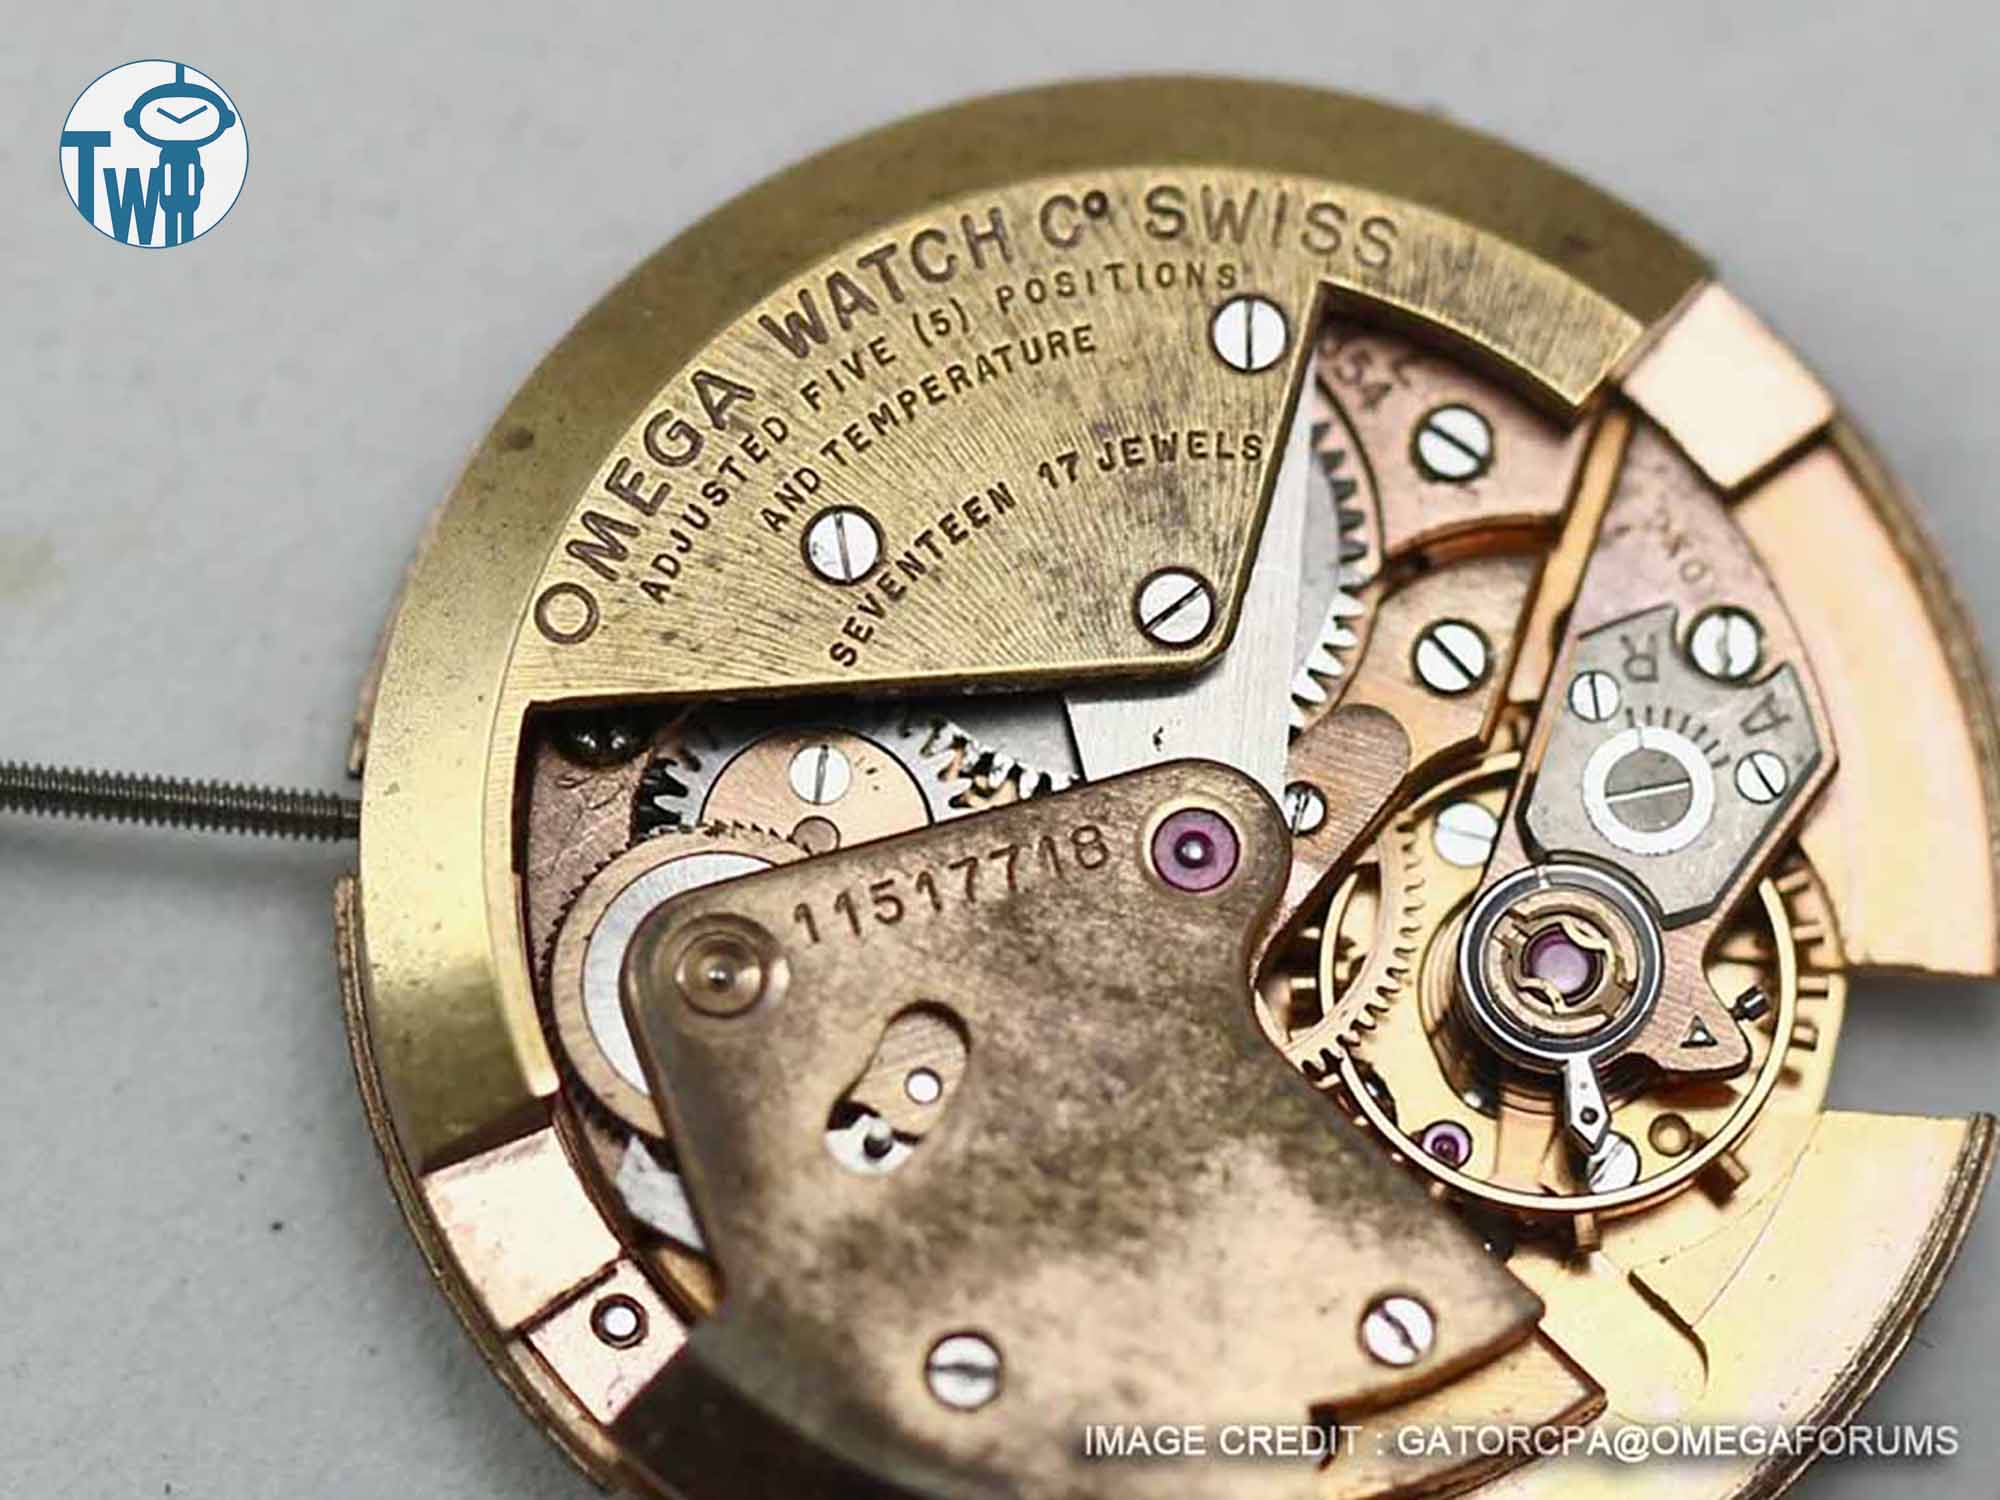 Omega歐米茄 Cal.354 天文台認證撞錘機芯的轉子上刻有「調整五個位置和溫度」的字樣｜太空人腕時計TW